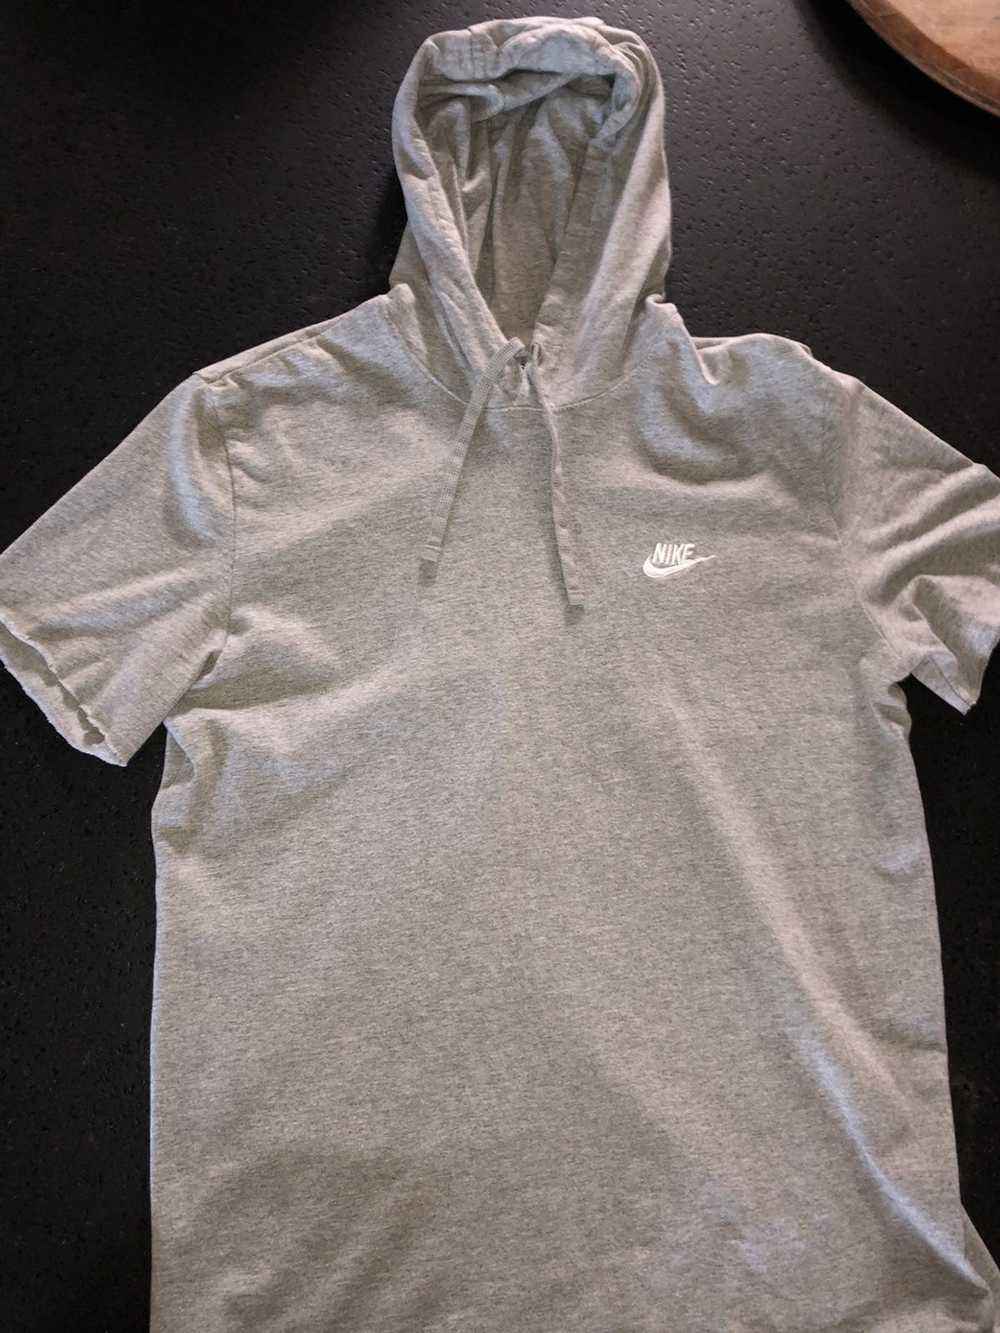 Nike Nike Shirt Hoodie - image 1